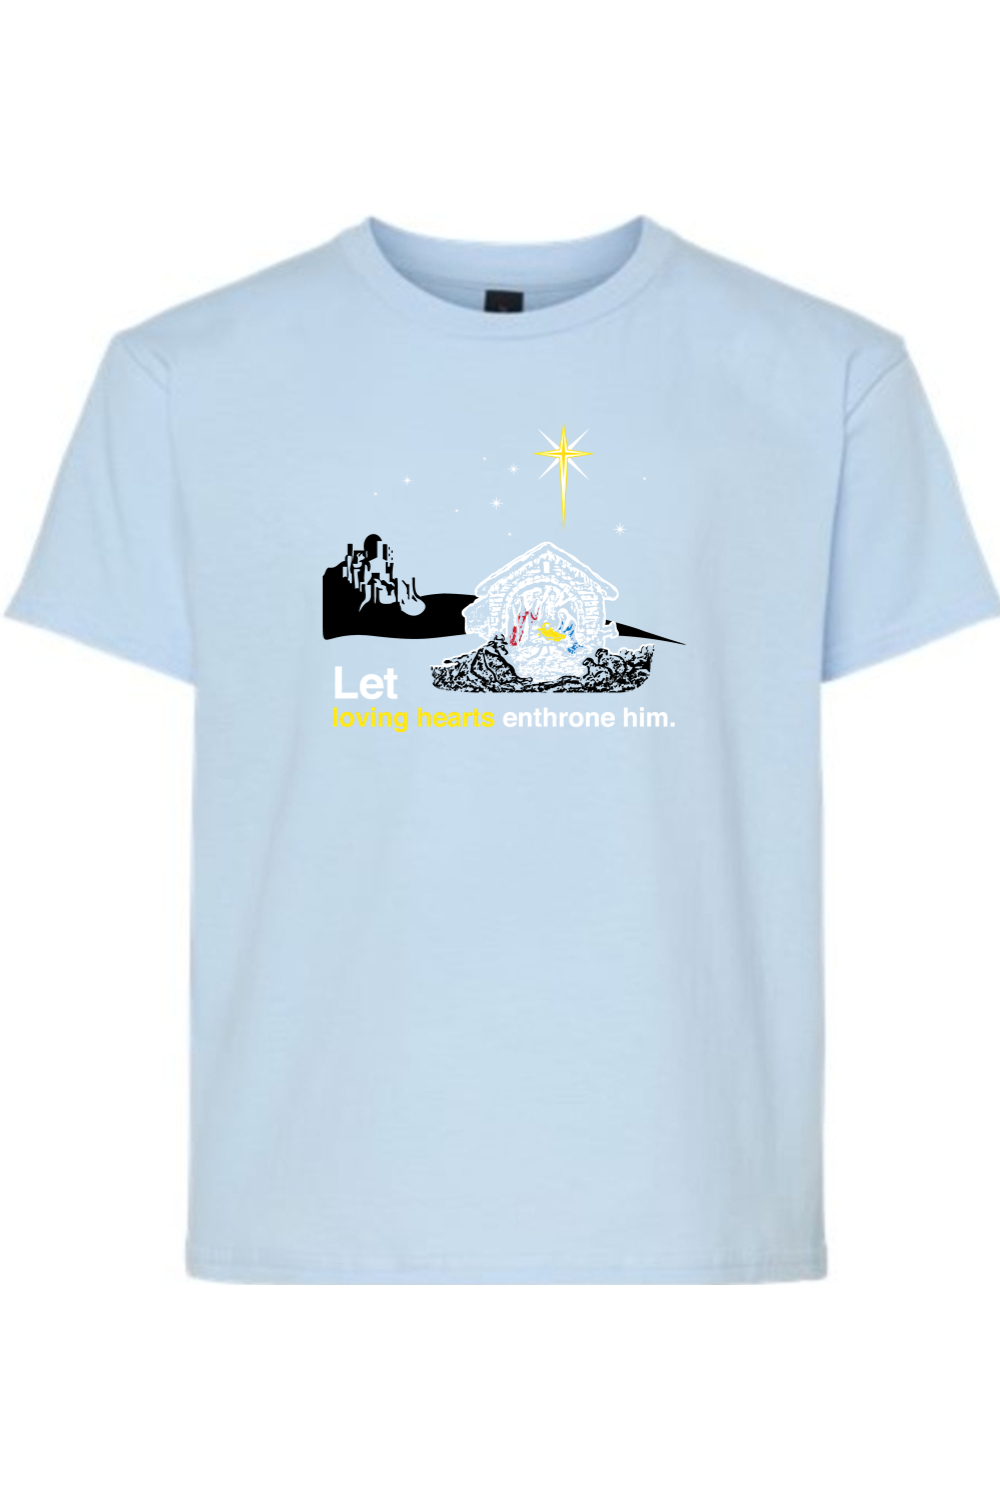 Holy Night - Christ's Nativity Youth T-Shirt